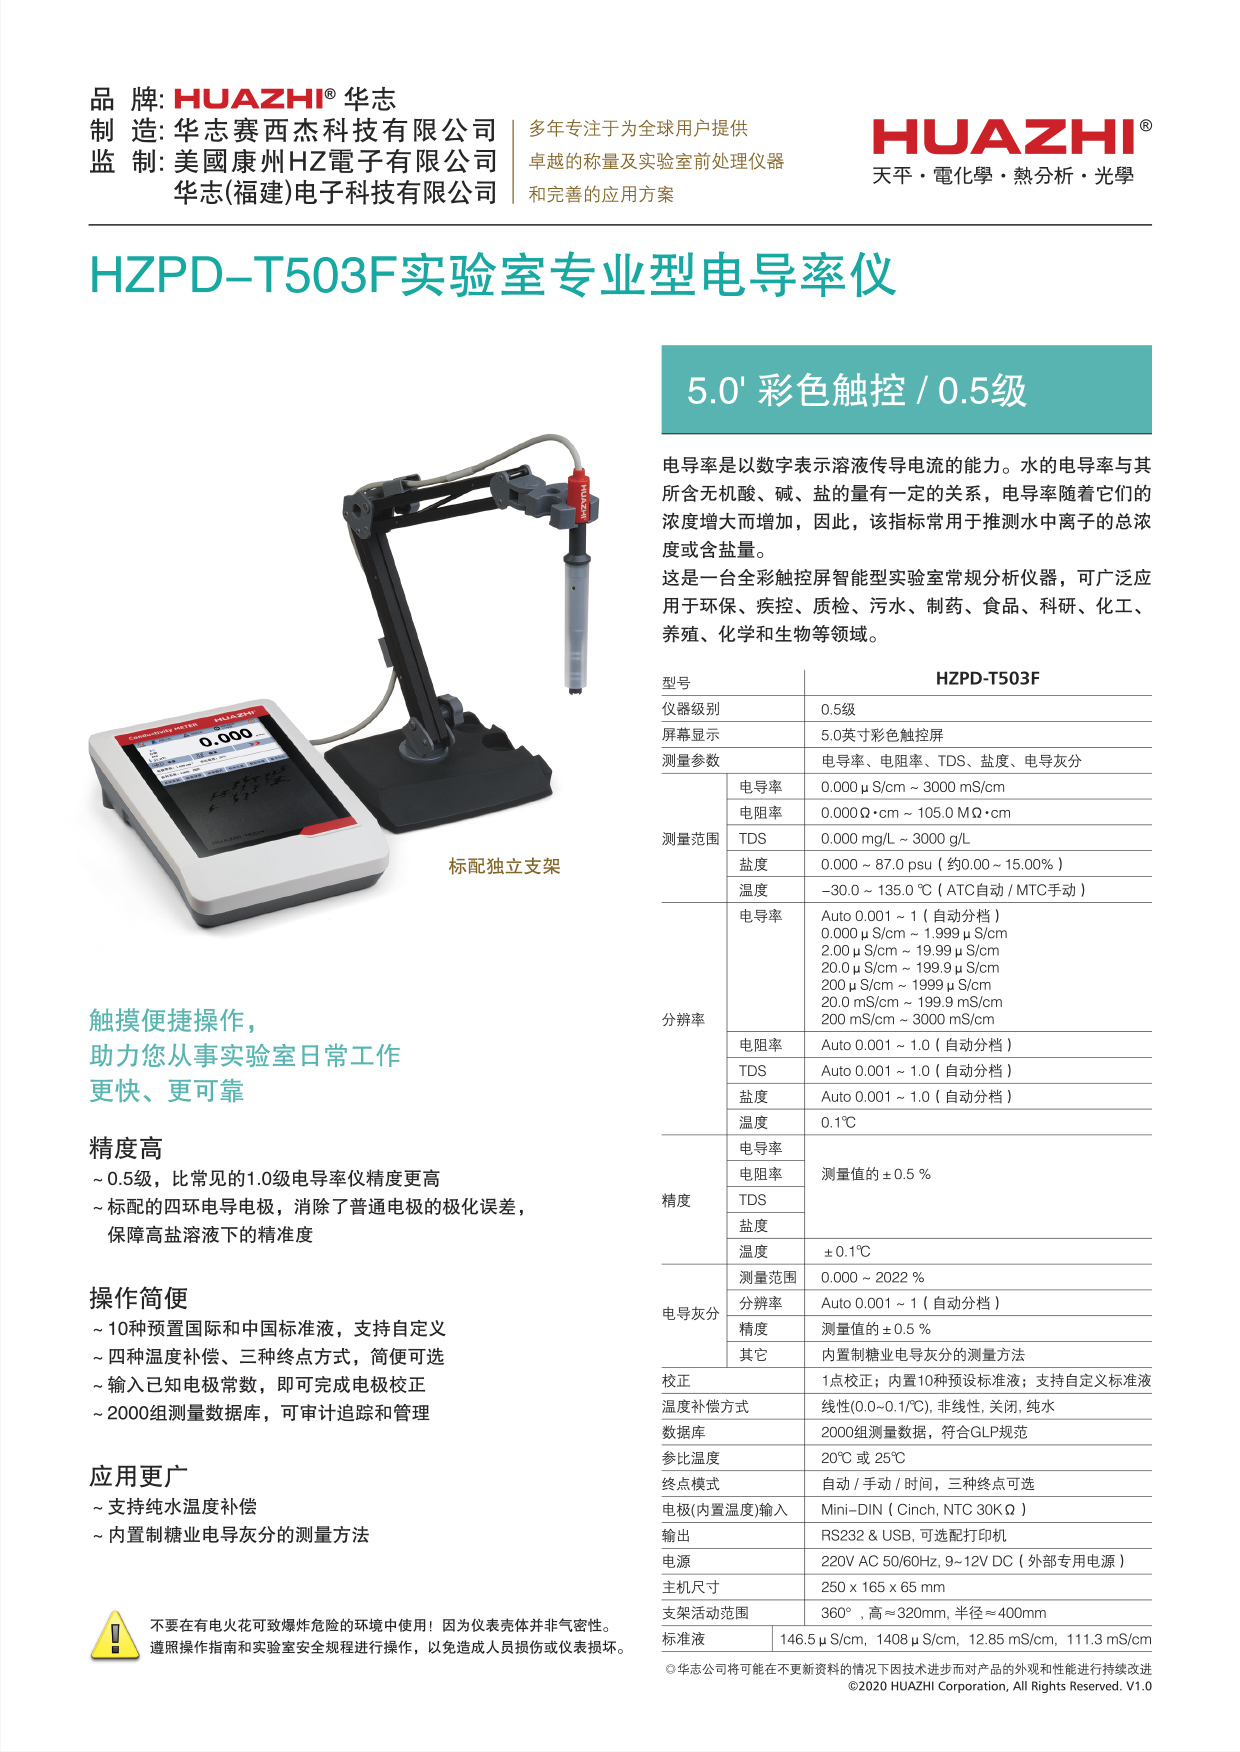 HZPD-T503F电导单机详情(v1.0)2020.jpg